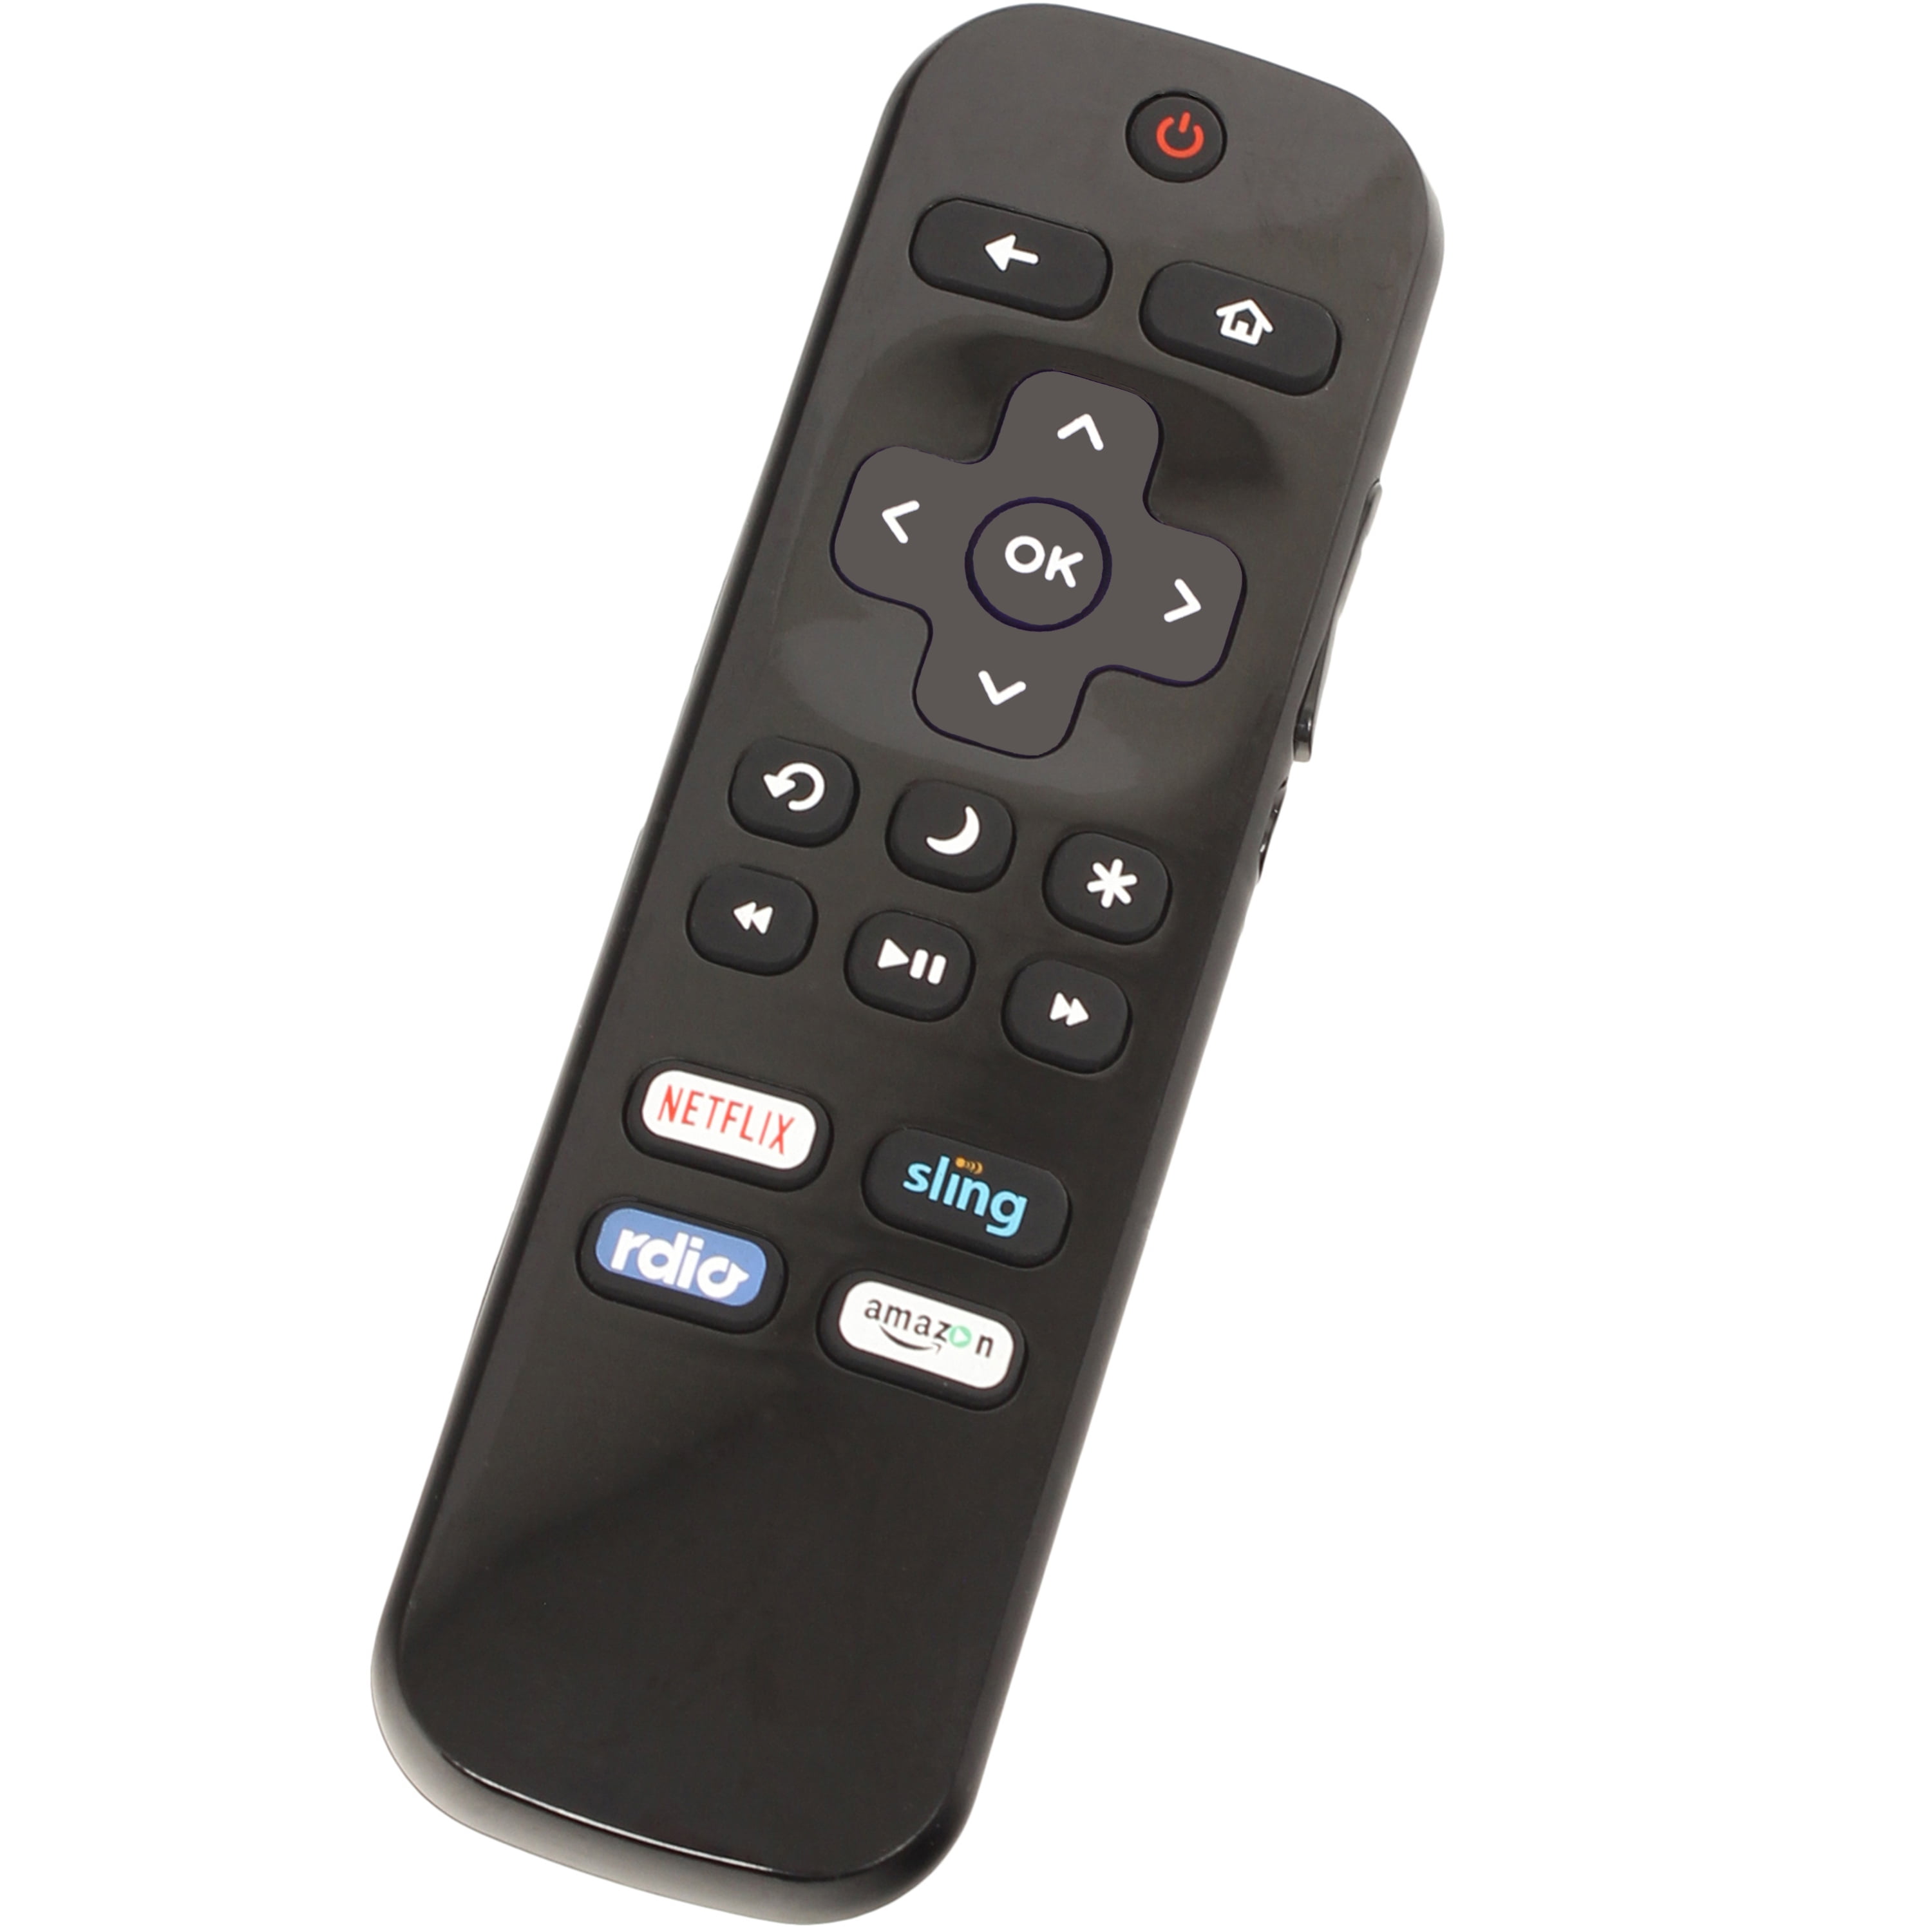 Remote Control for TCL Roku TV Smart TV RC280 55UP120 55us57 55S401 32S3850 40FS3800 48FS3700 32S3800 55FS3700 48FS4610R 32S3850A 55FS4610R 40FS4610R with NETFLIX Sling HULU VUDU Keys 2017 2018 tcl tv 